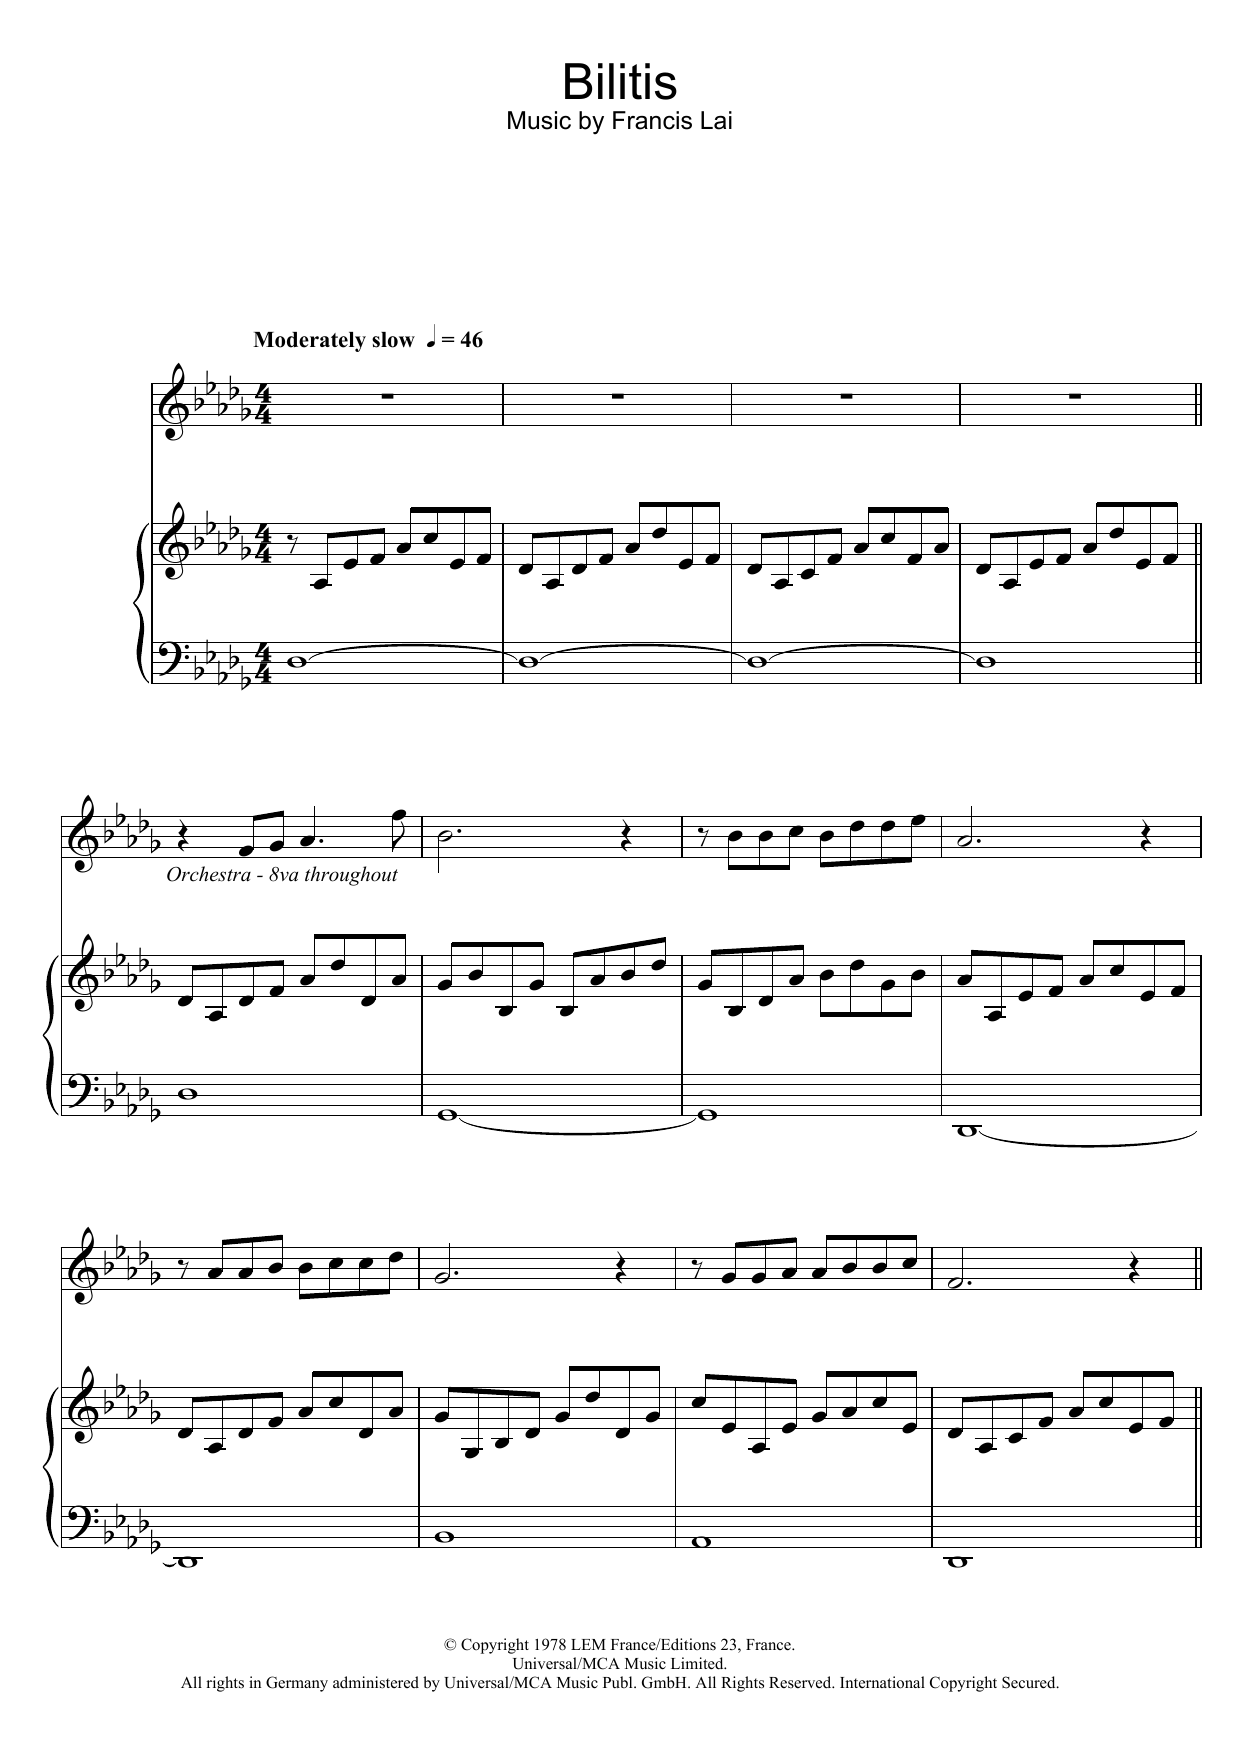 Richard Clayderman Bilitis Sheet Music Notes & Chords for Piano - Download or Print PDF